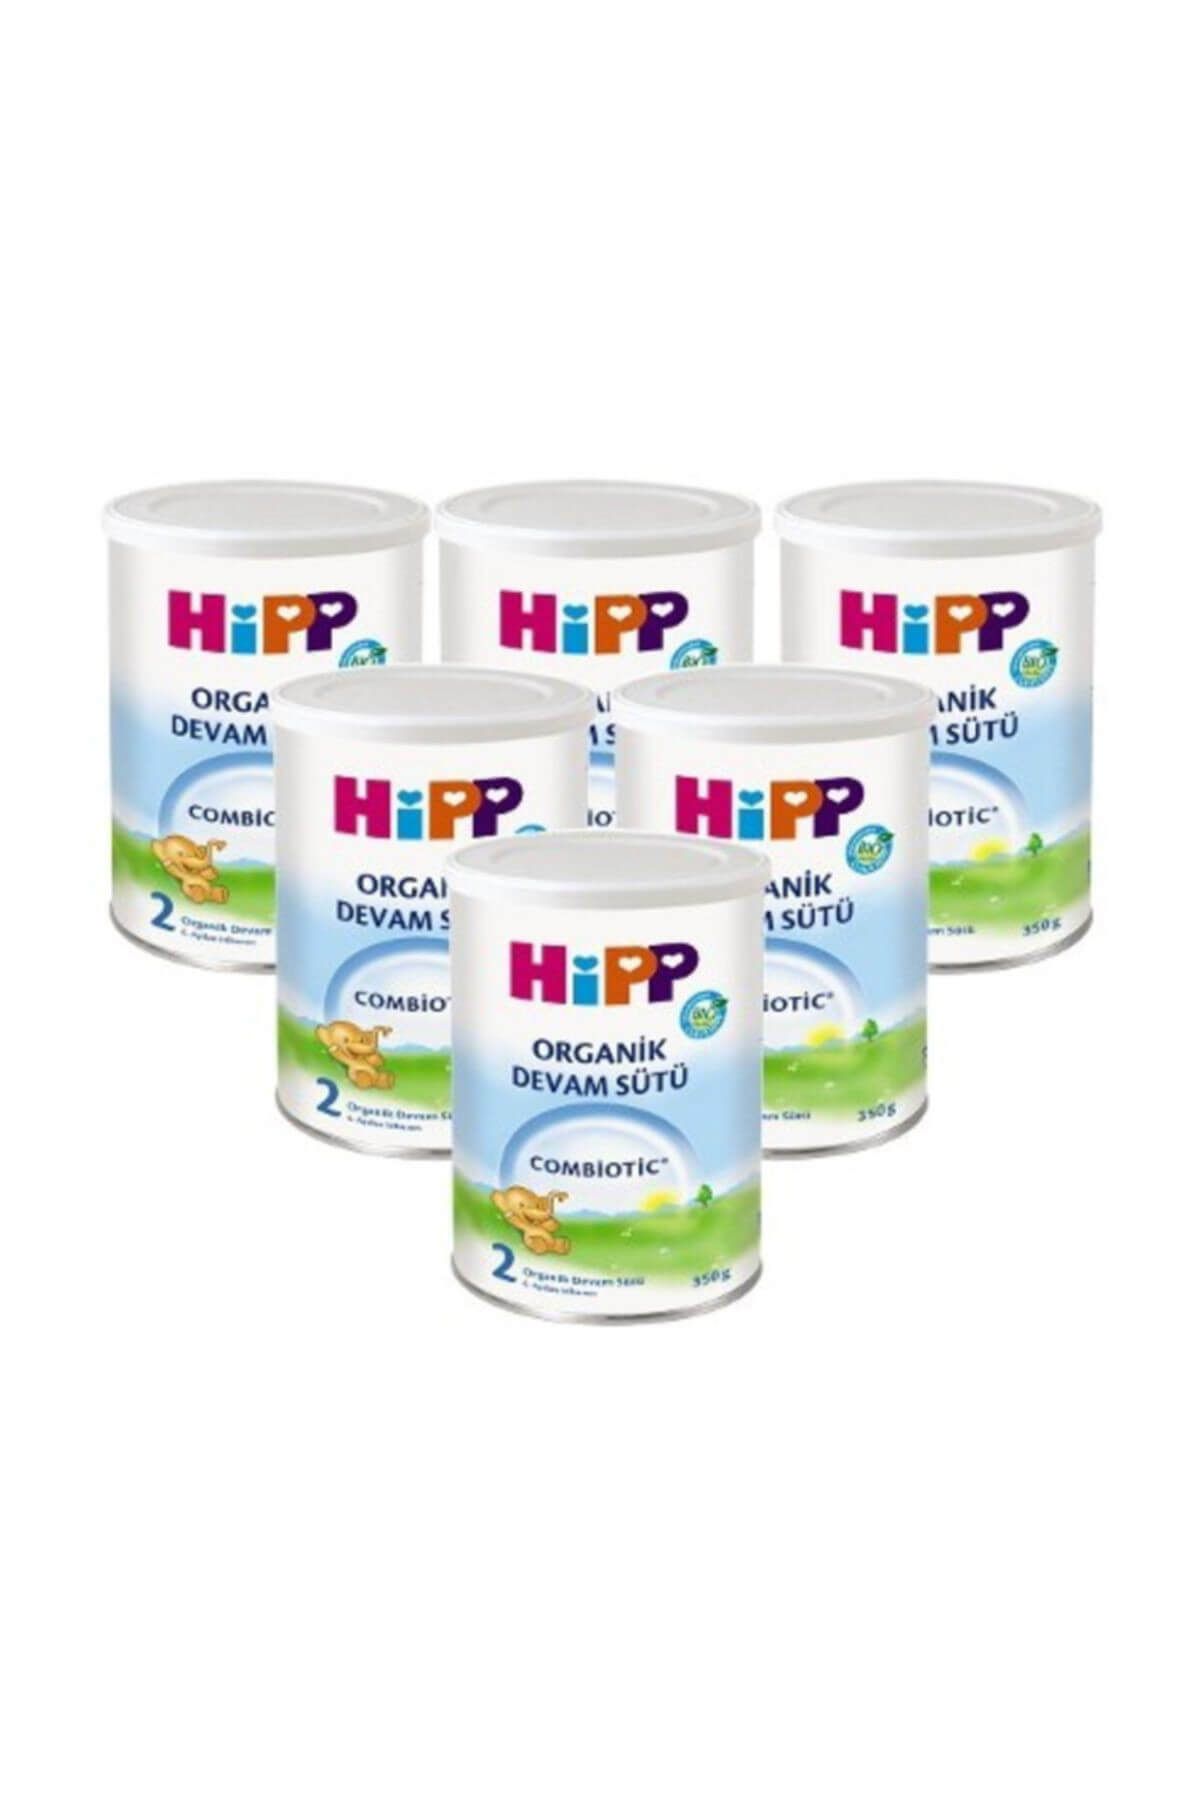 Hipp Organik Combiotic Devam Sütü 2 Numara 350 gr x 6 Adet